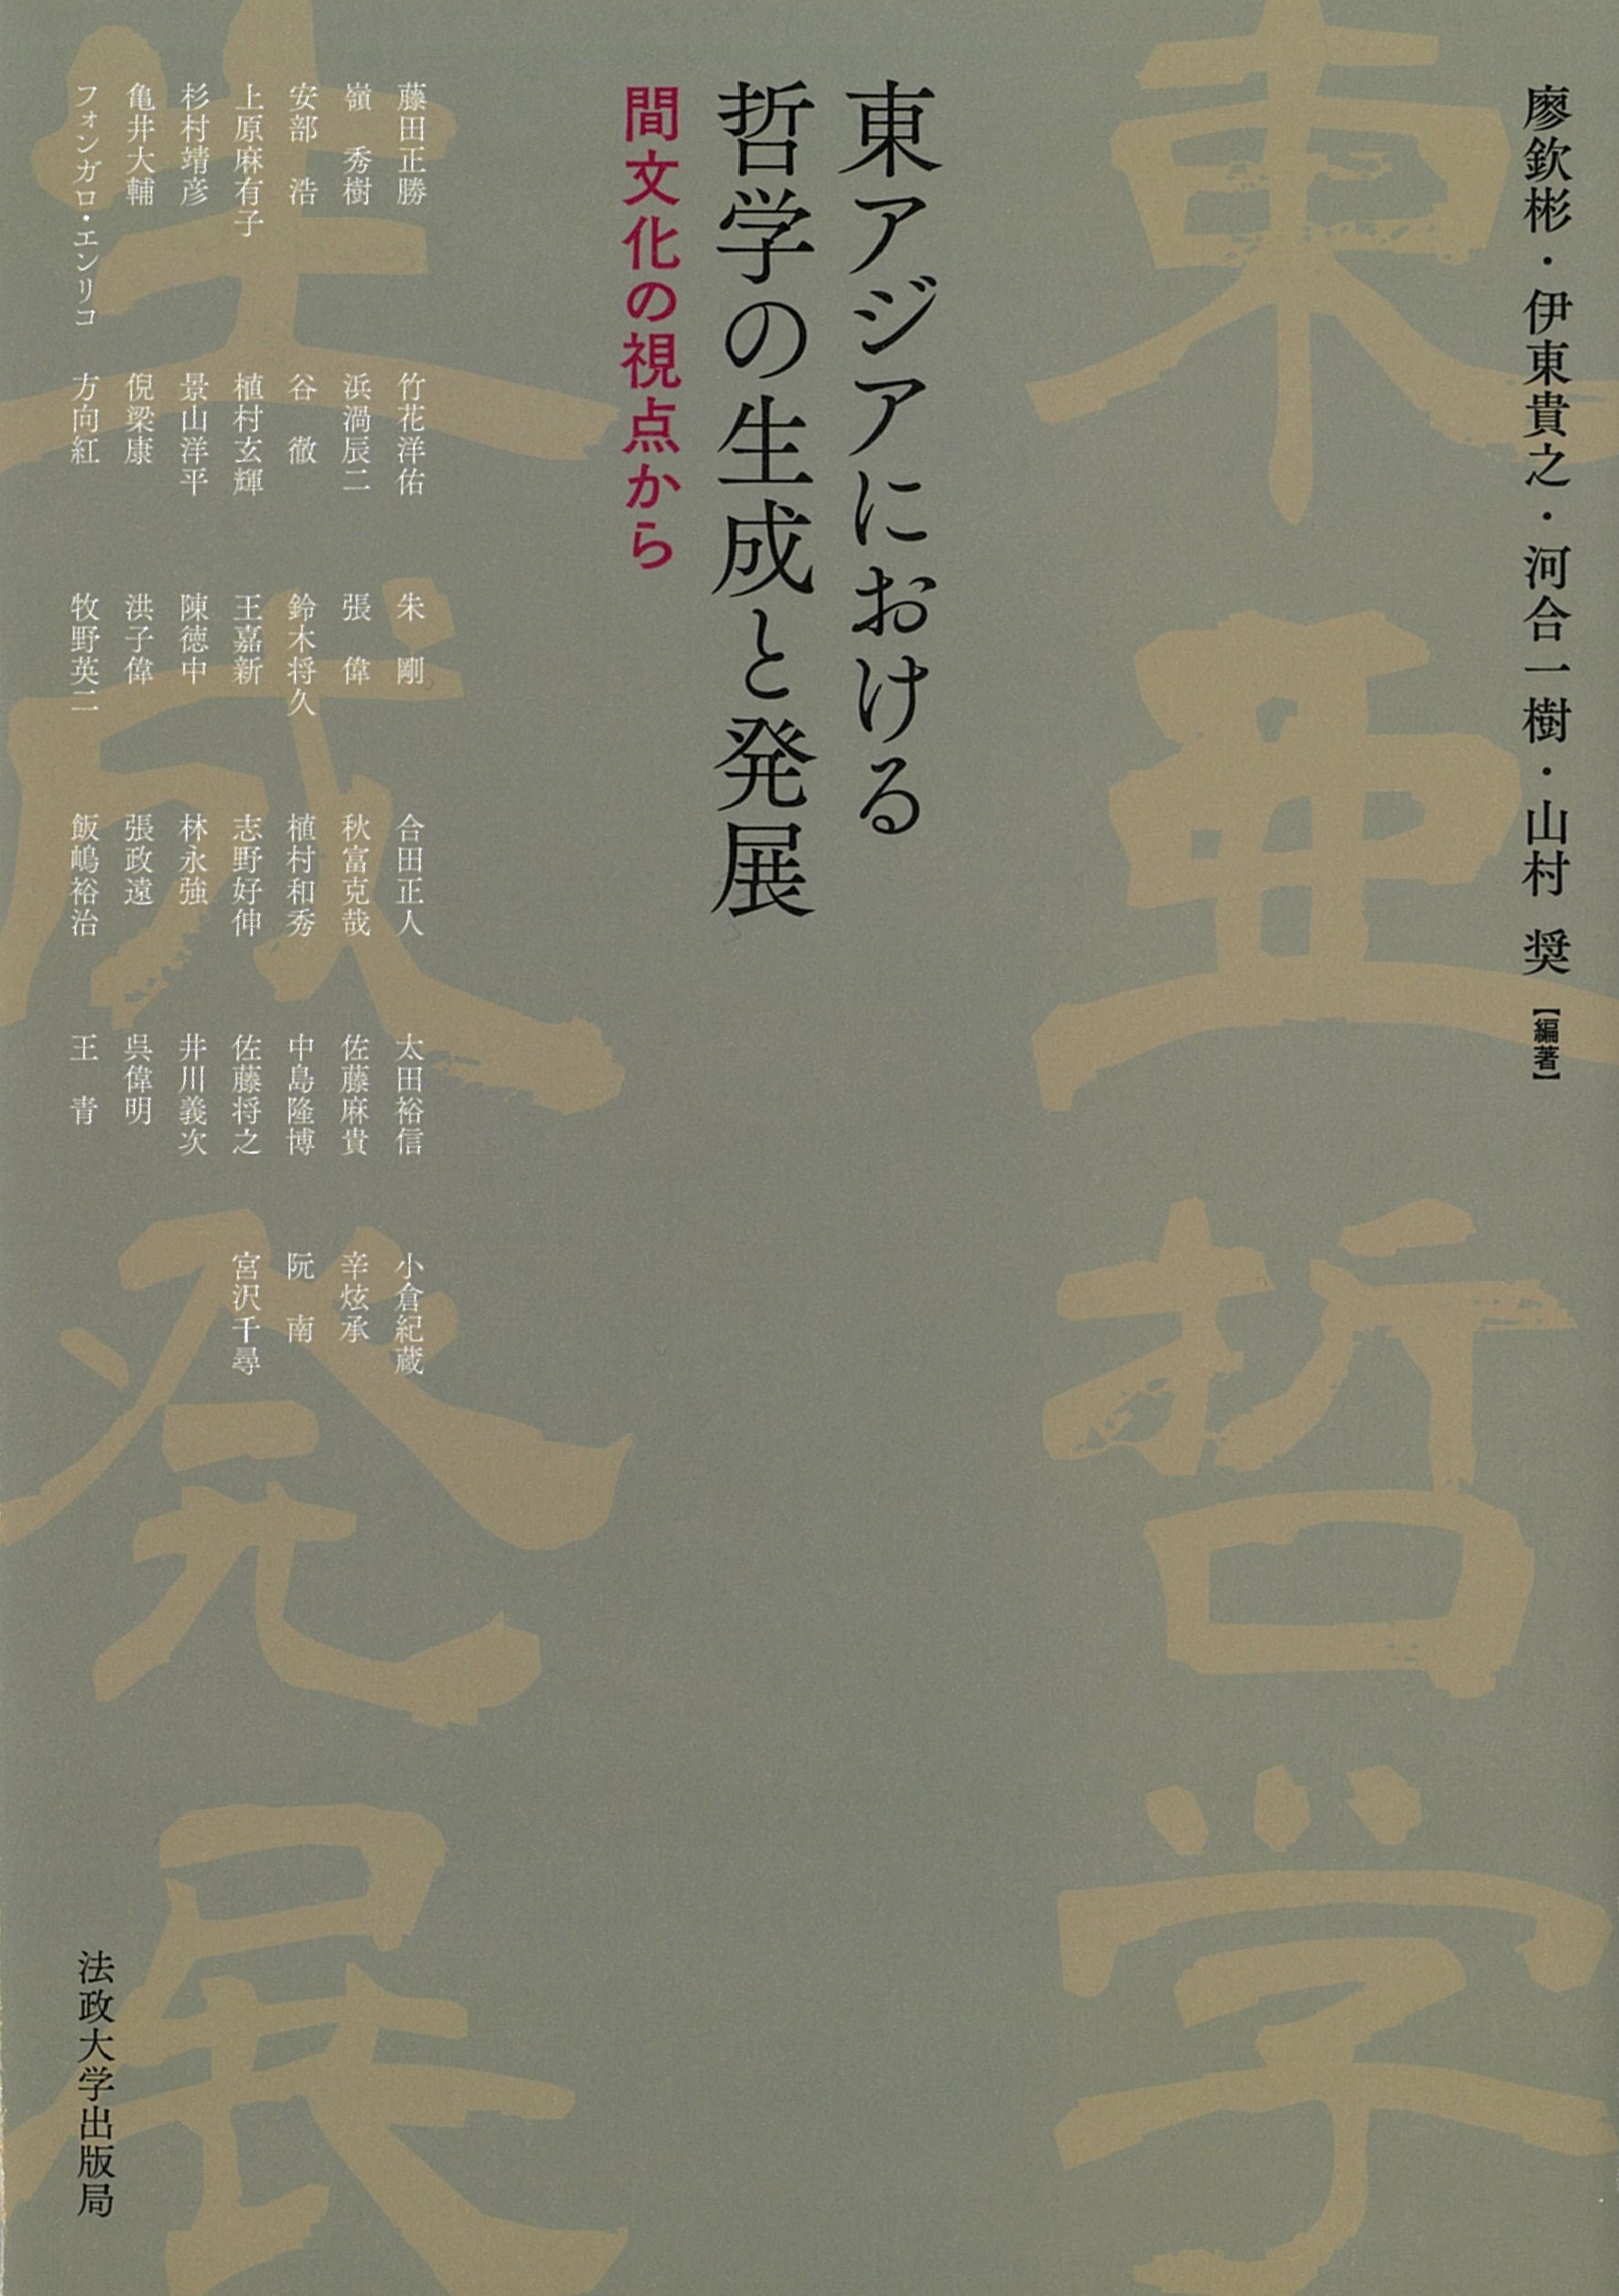 Higashi Ajia ni okeru tetsugaku no seisei to hatten: Kan bunka no shiten kara (The Generation  and Development of Philosophy in East Asia: An Intercultural Perspective)